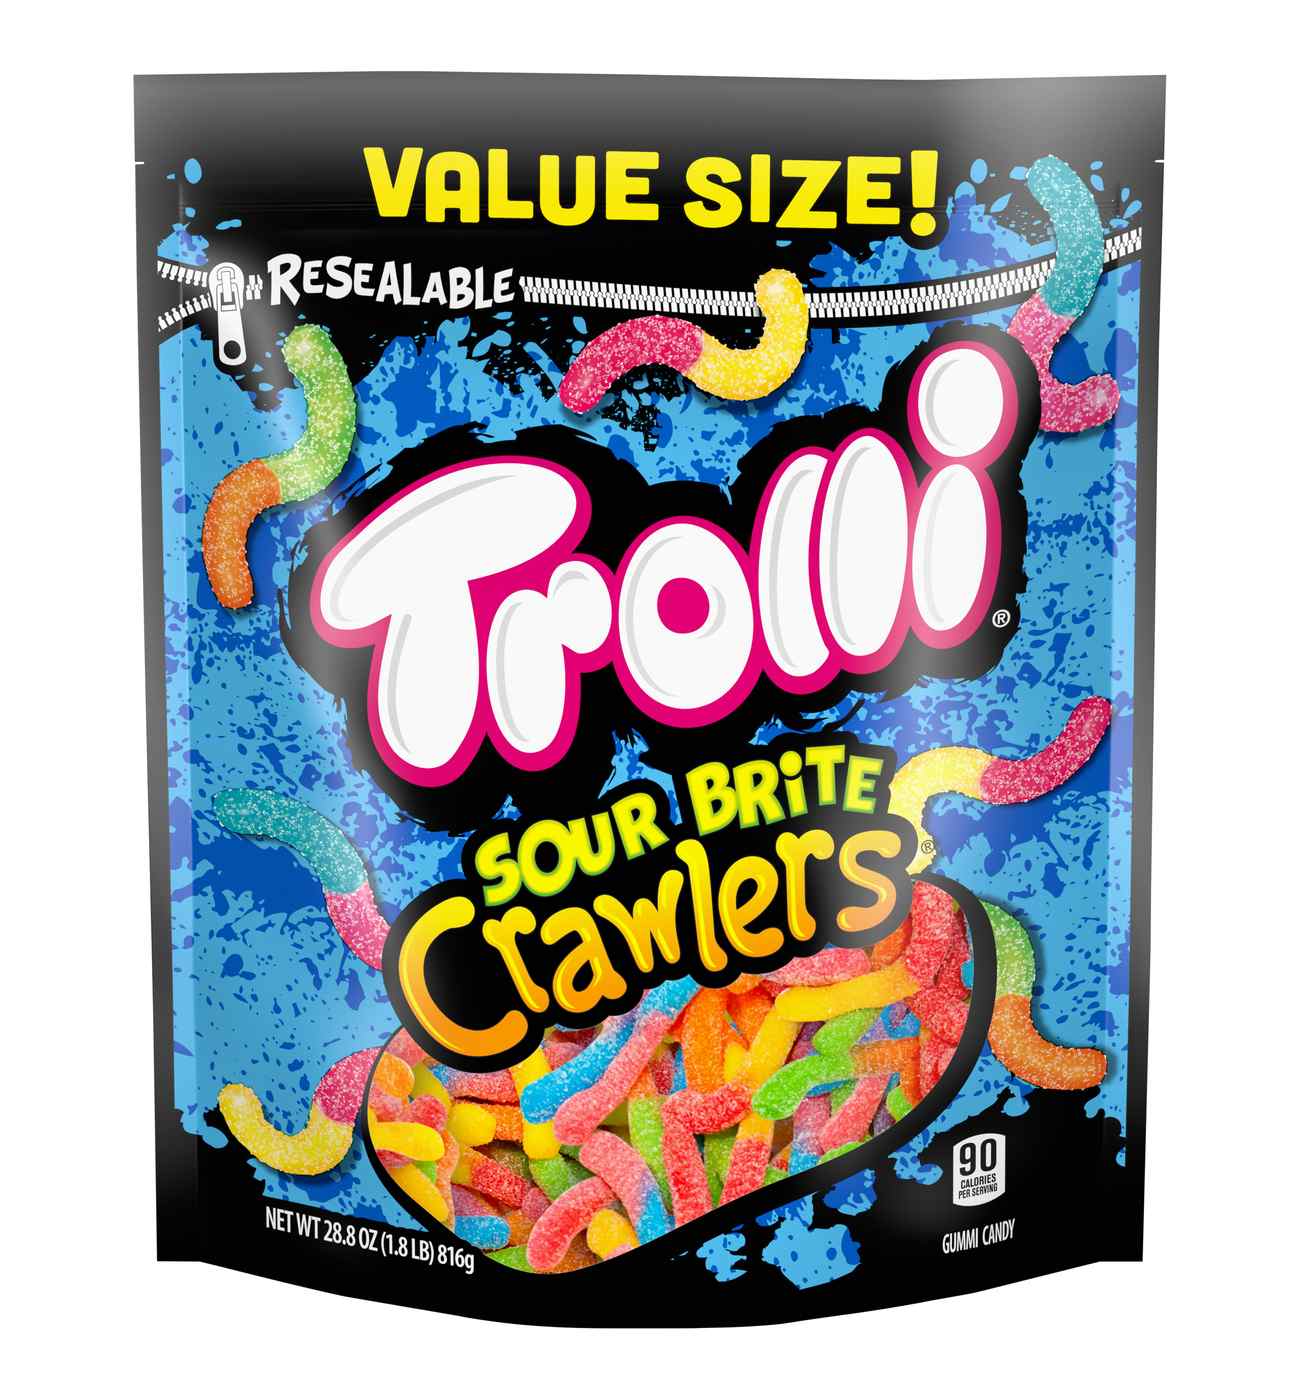 Trolli Sour Brite Crawlers Value Size; image 1 of 3